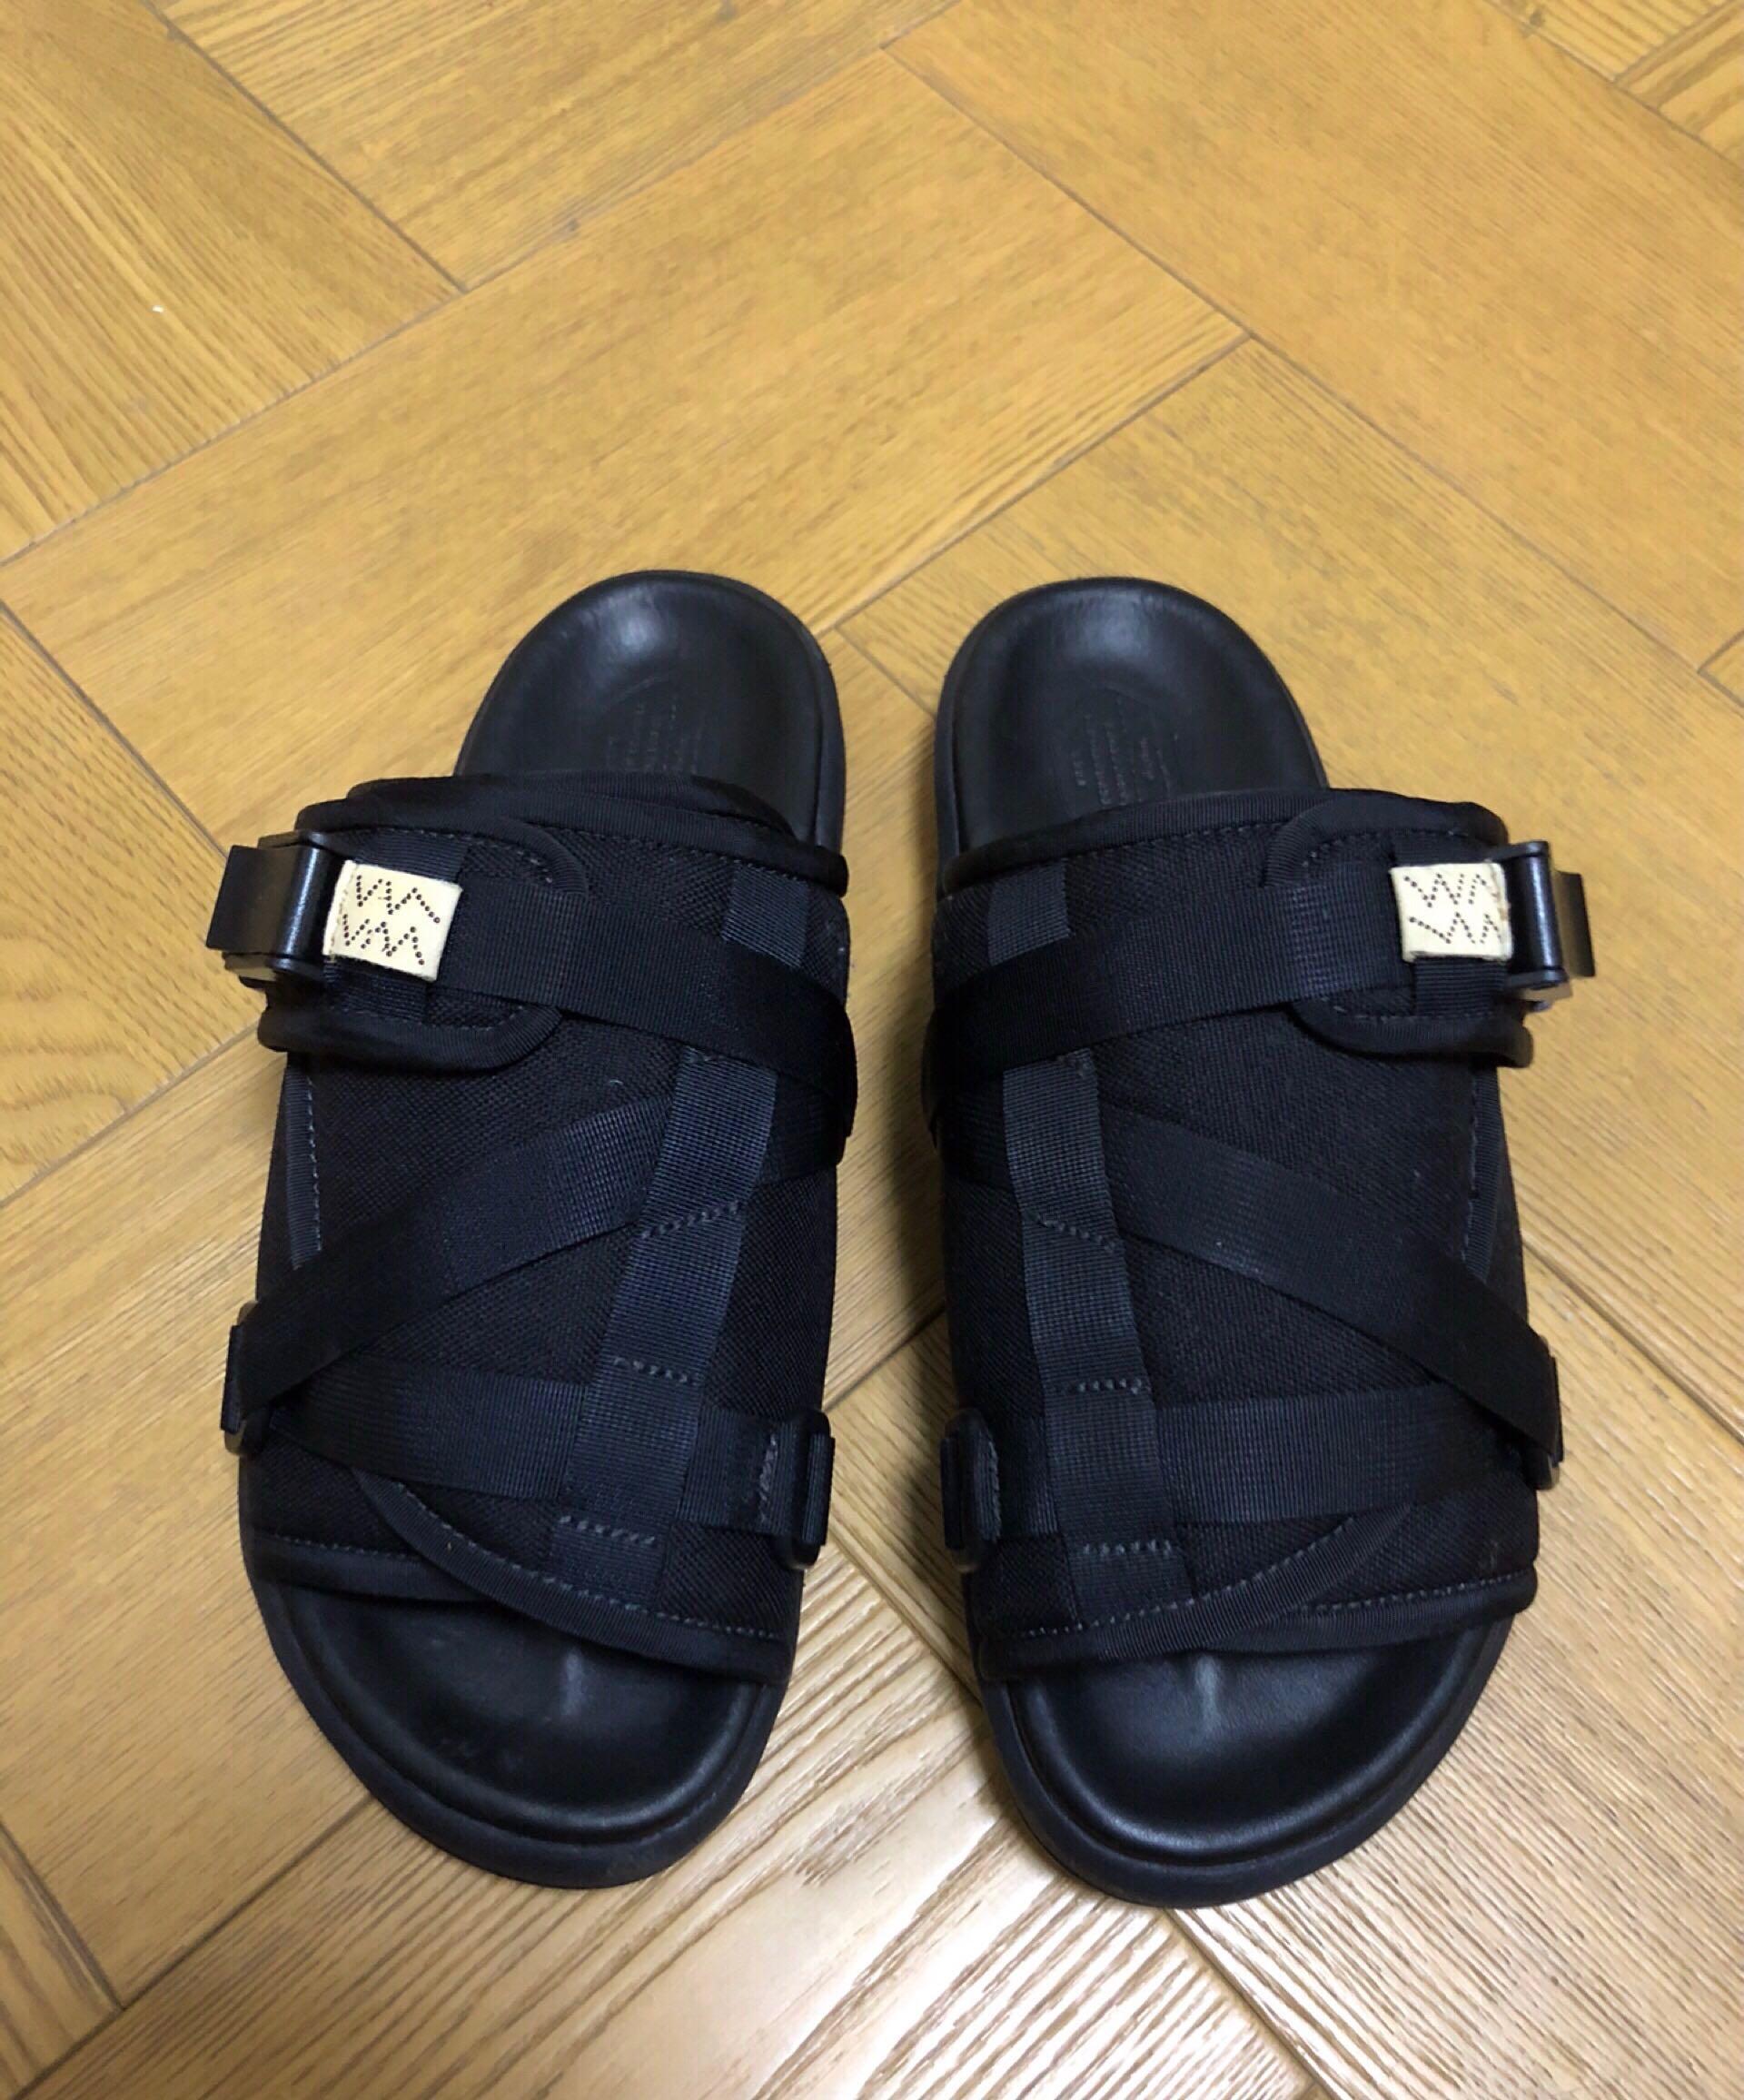 Footwear, Slippers \u0026 Sandals on Carousell